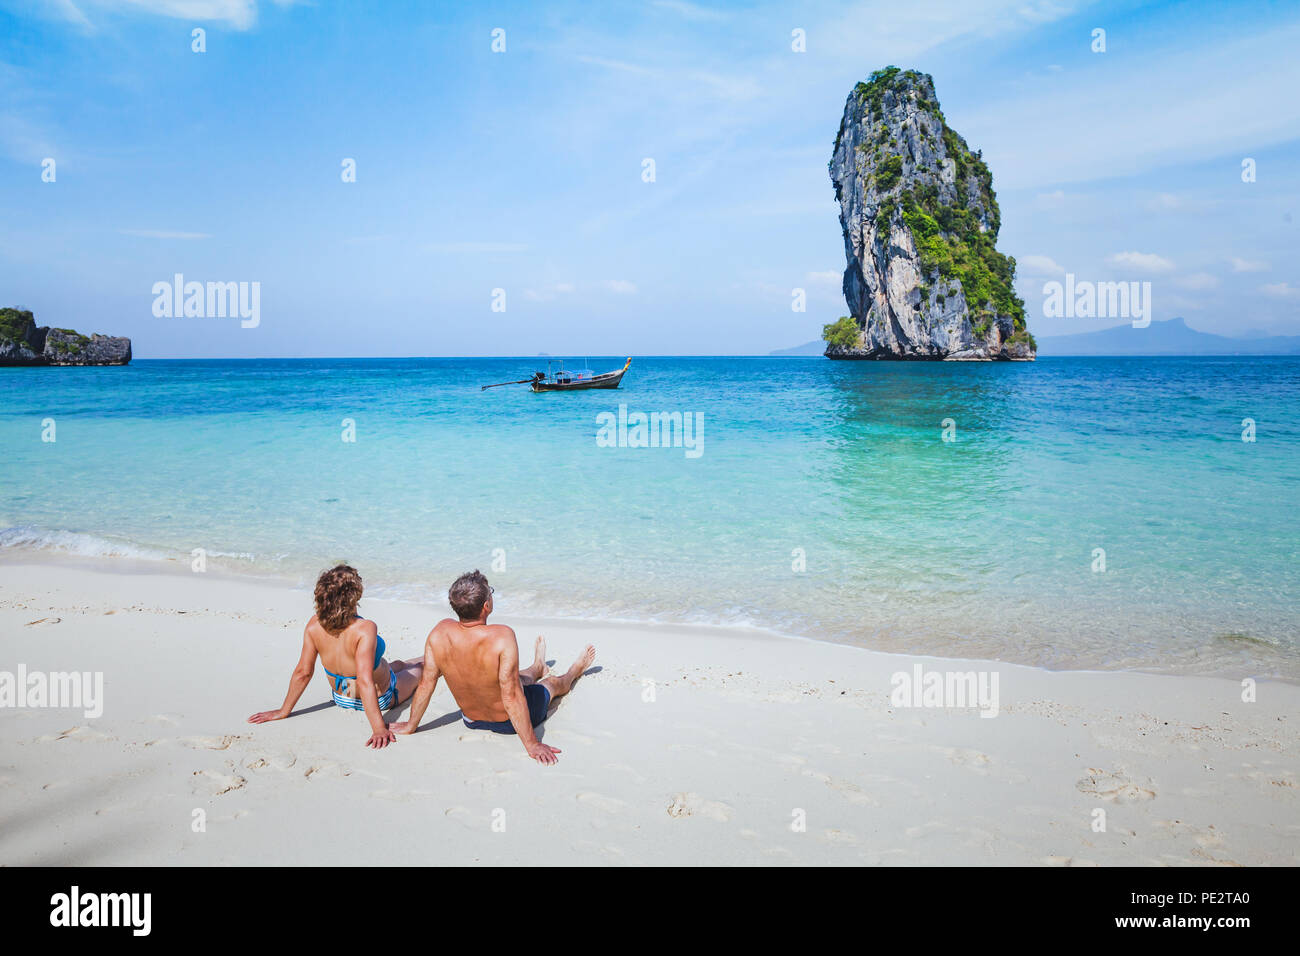 travel to Thailand, honeymoon family couple enjoying sunbath and sea on paradise beach, holiday tourism and relaxation Stock Photo